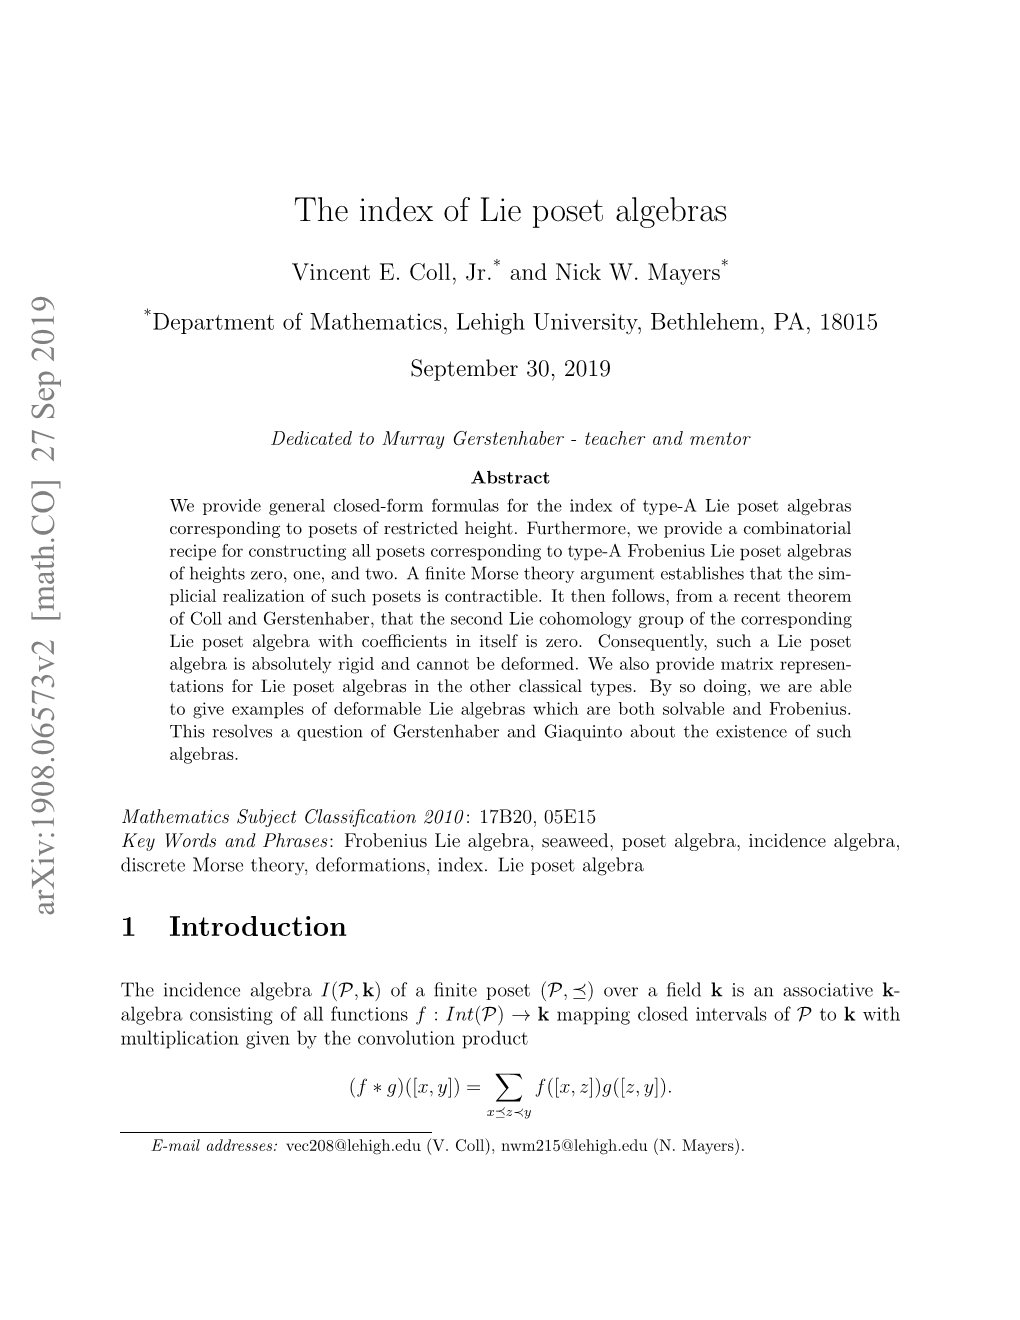 The Index of Lie Poset Algebras” at Lehigh University [28]